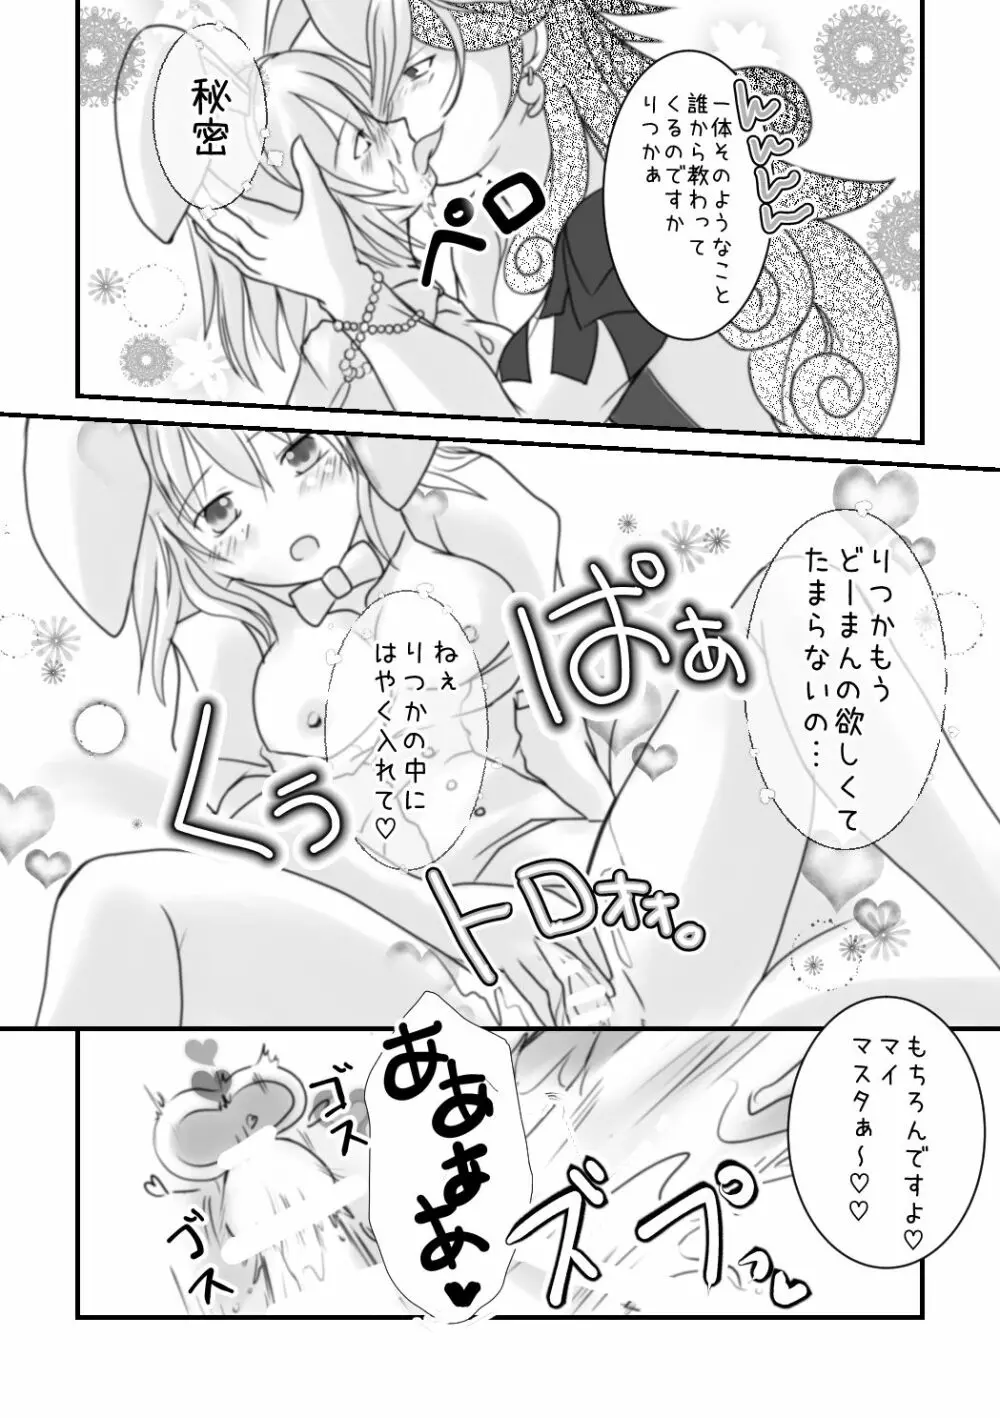 ] Rin guda ♀ rakugaki guda yuru manga(Fate/Grand Order] 4ページ